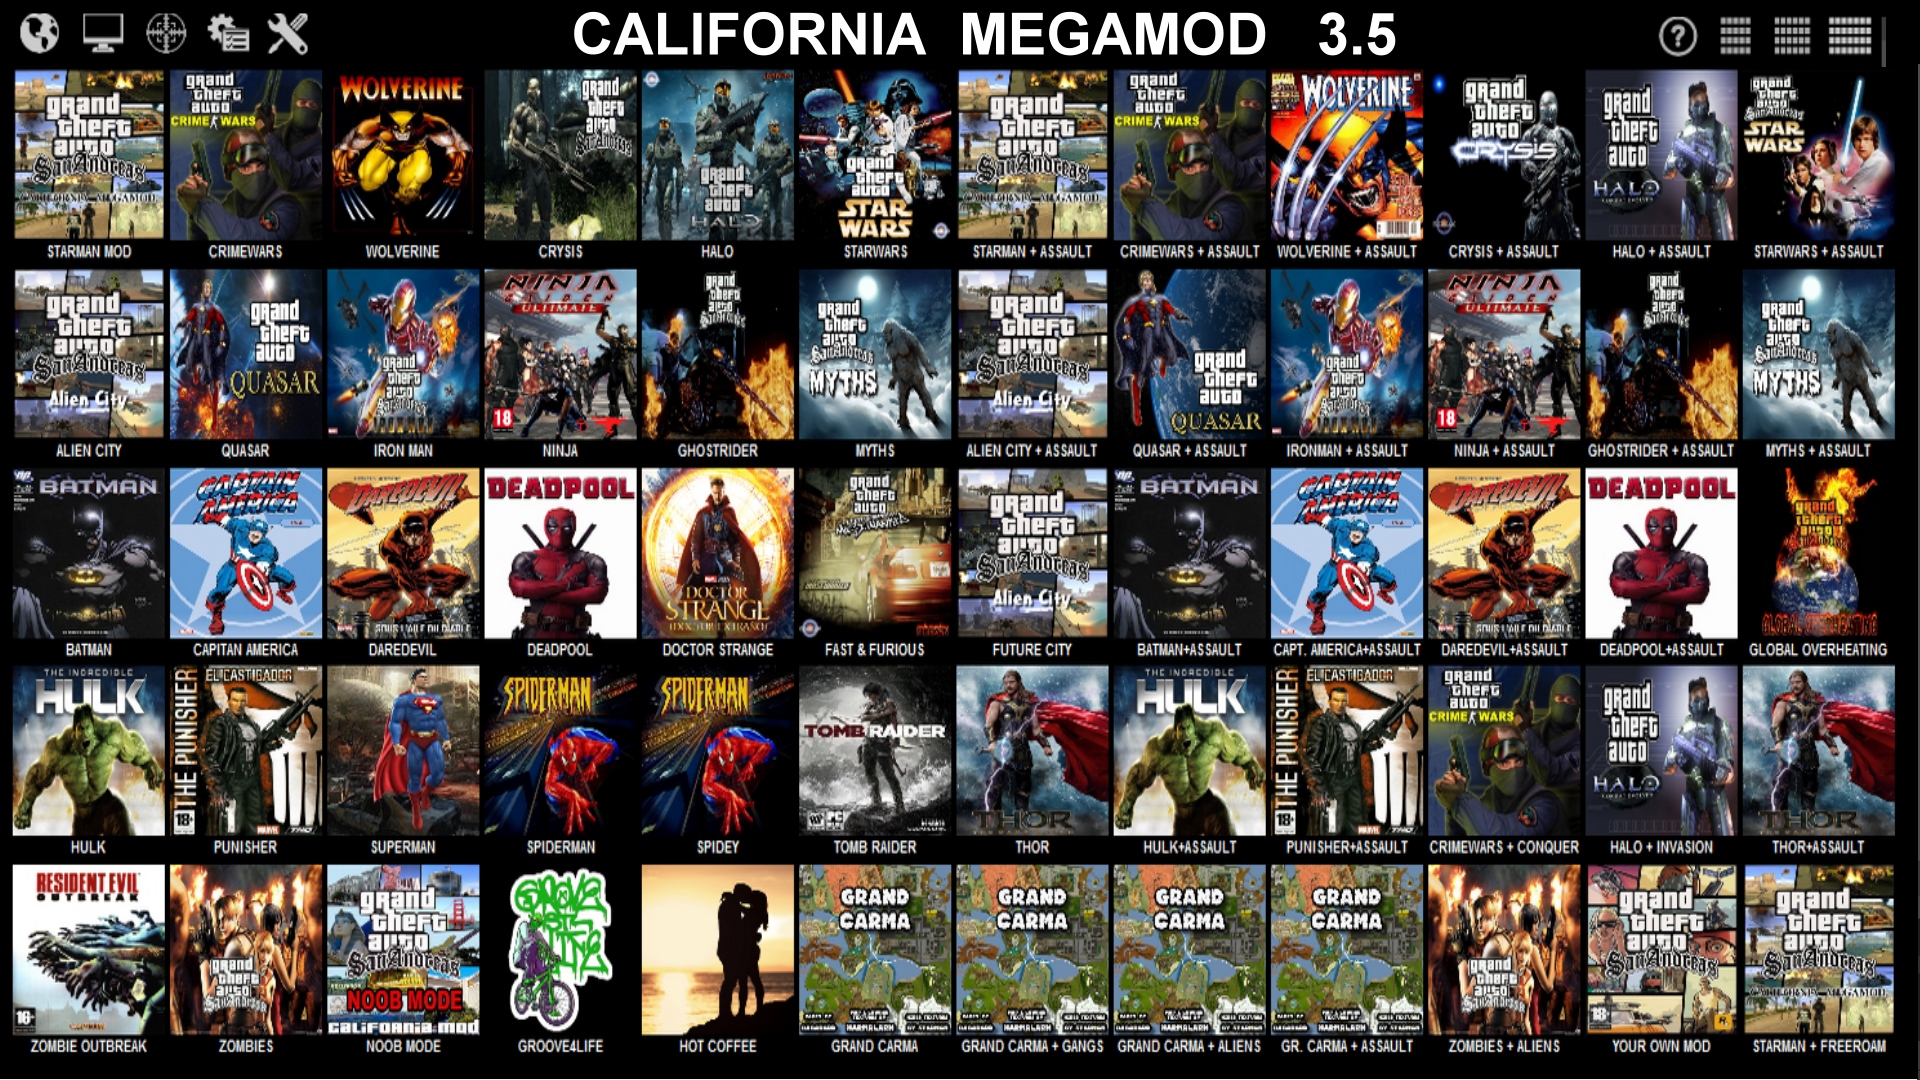 California Megamod version 3.5